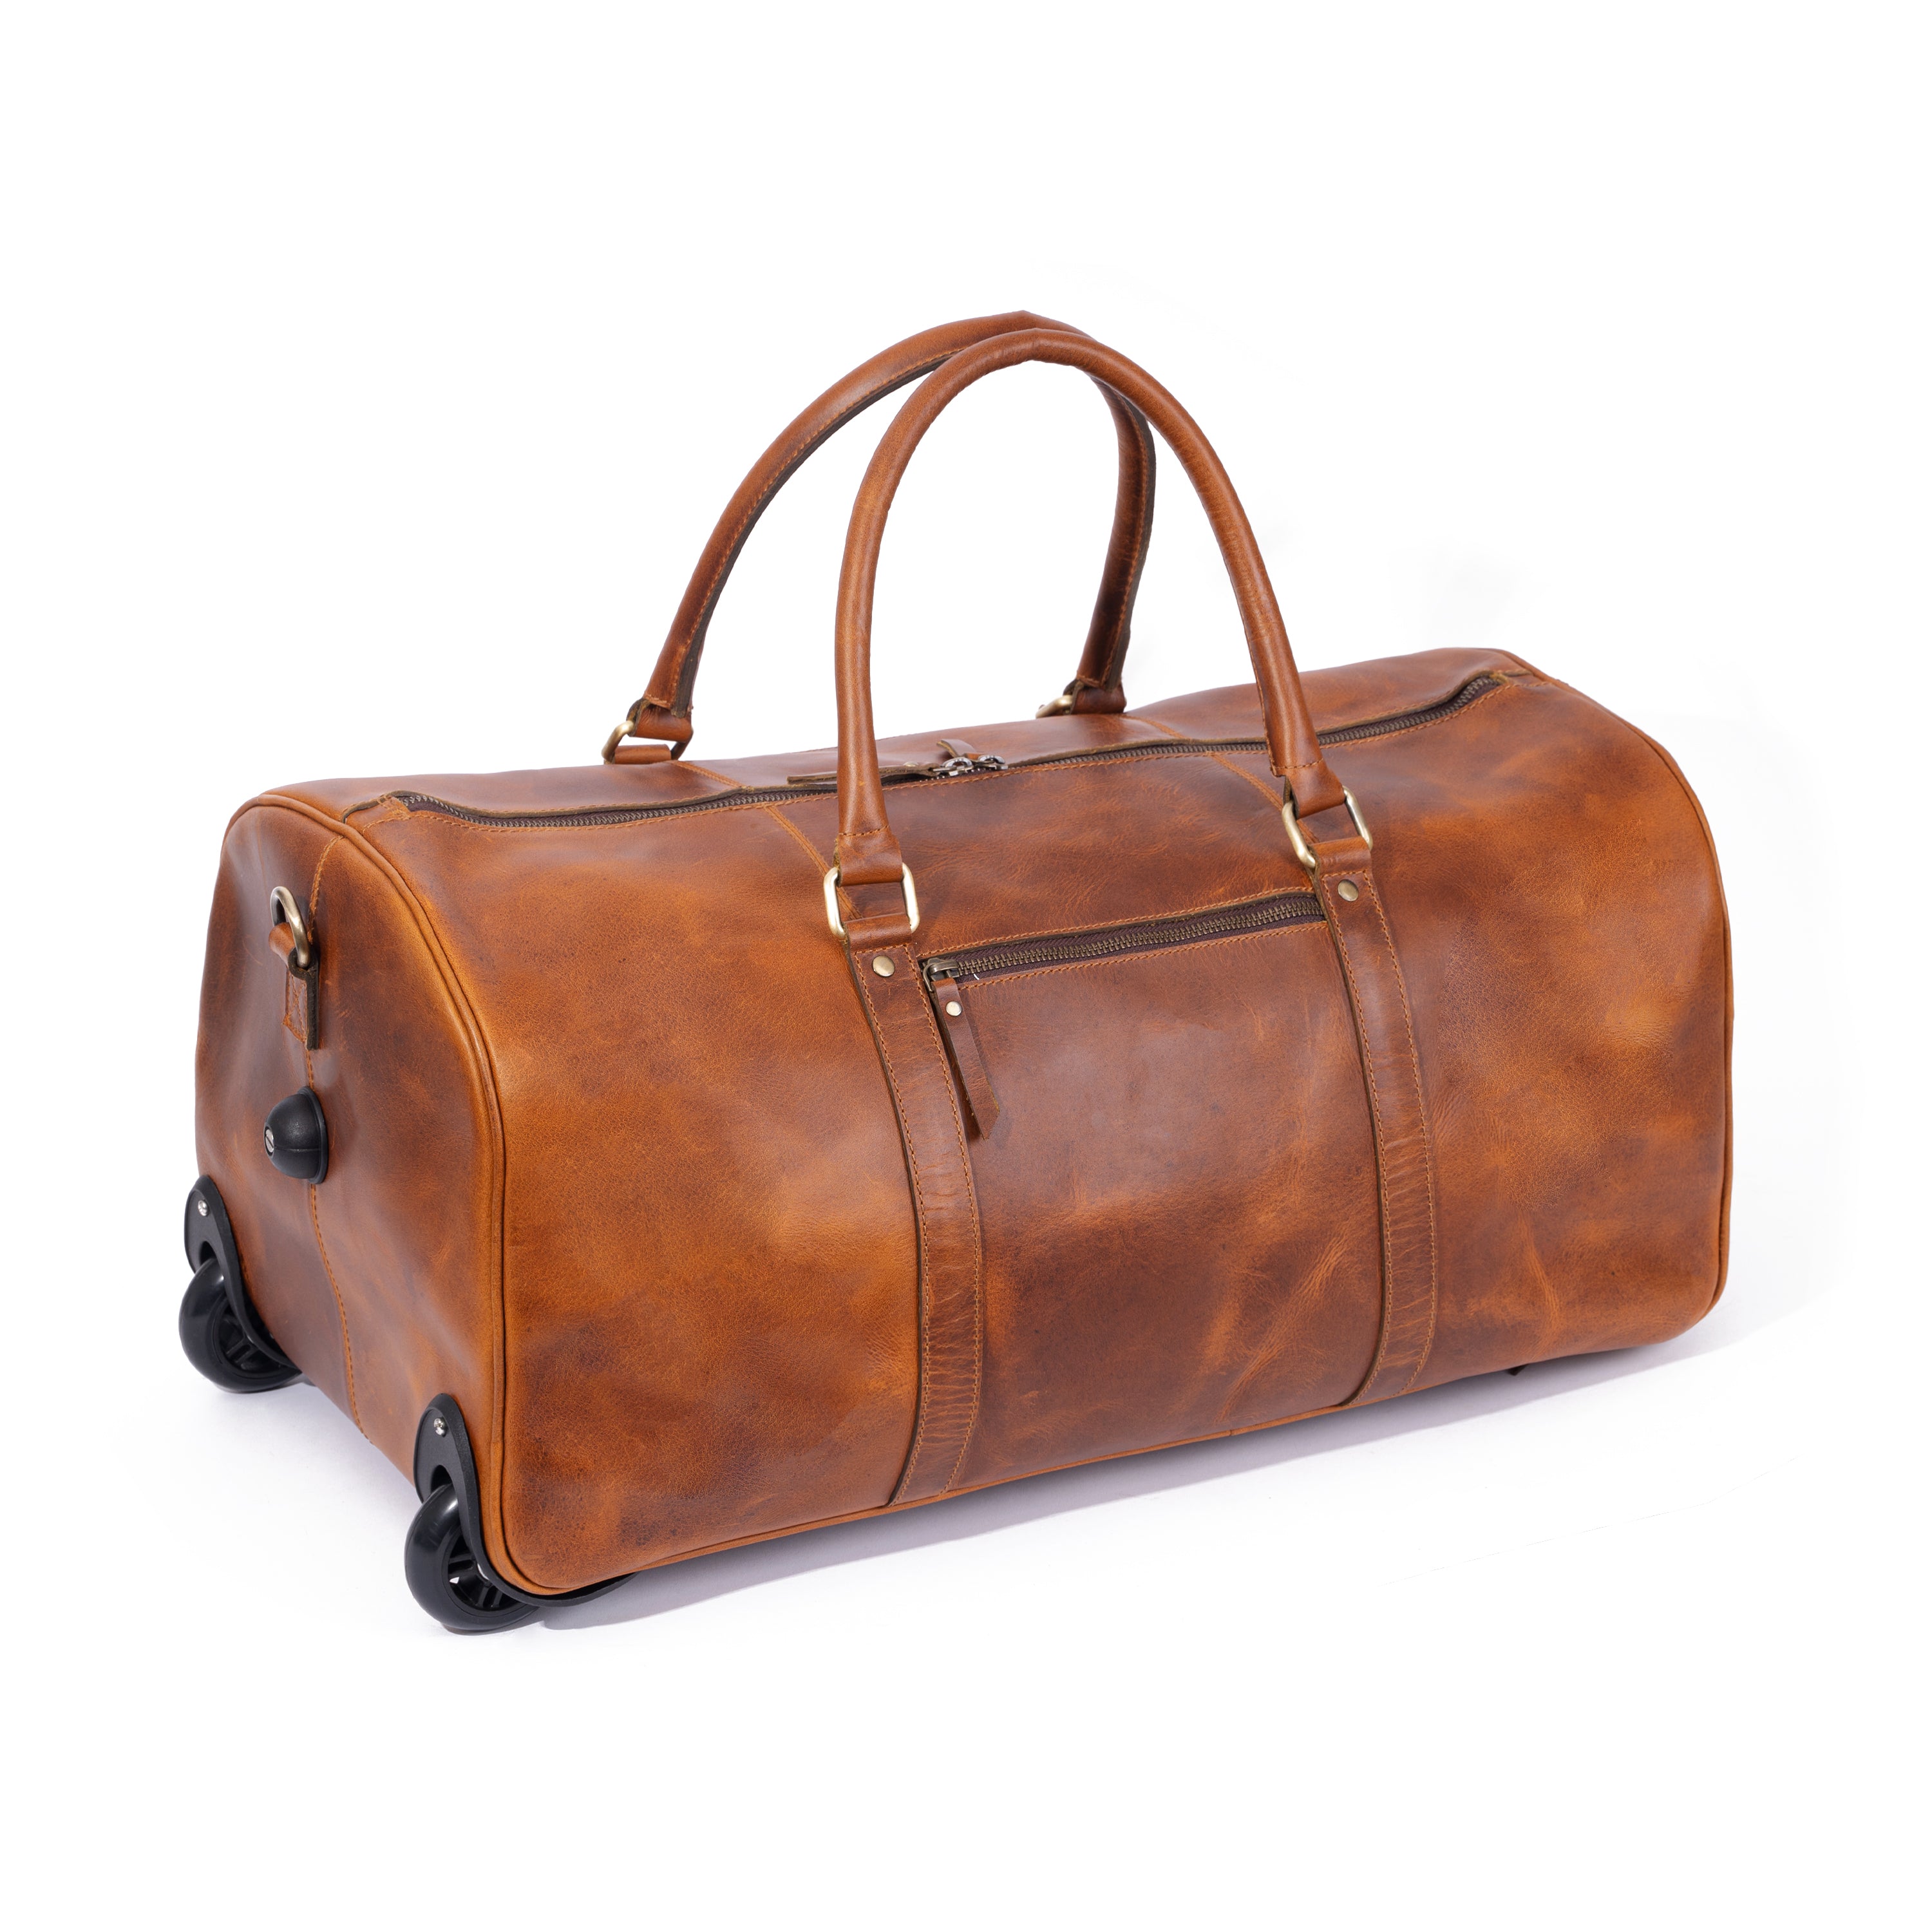 Leather Weekend Bag Genuine Travel Duffle Sports Cabin Gym Holdall Luggage  Bag